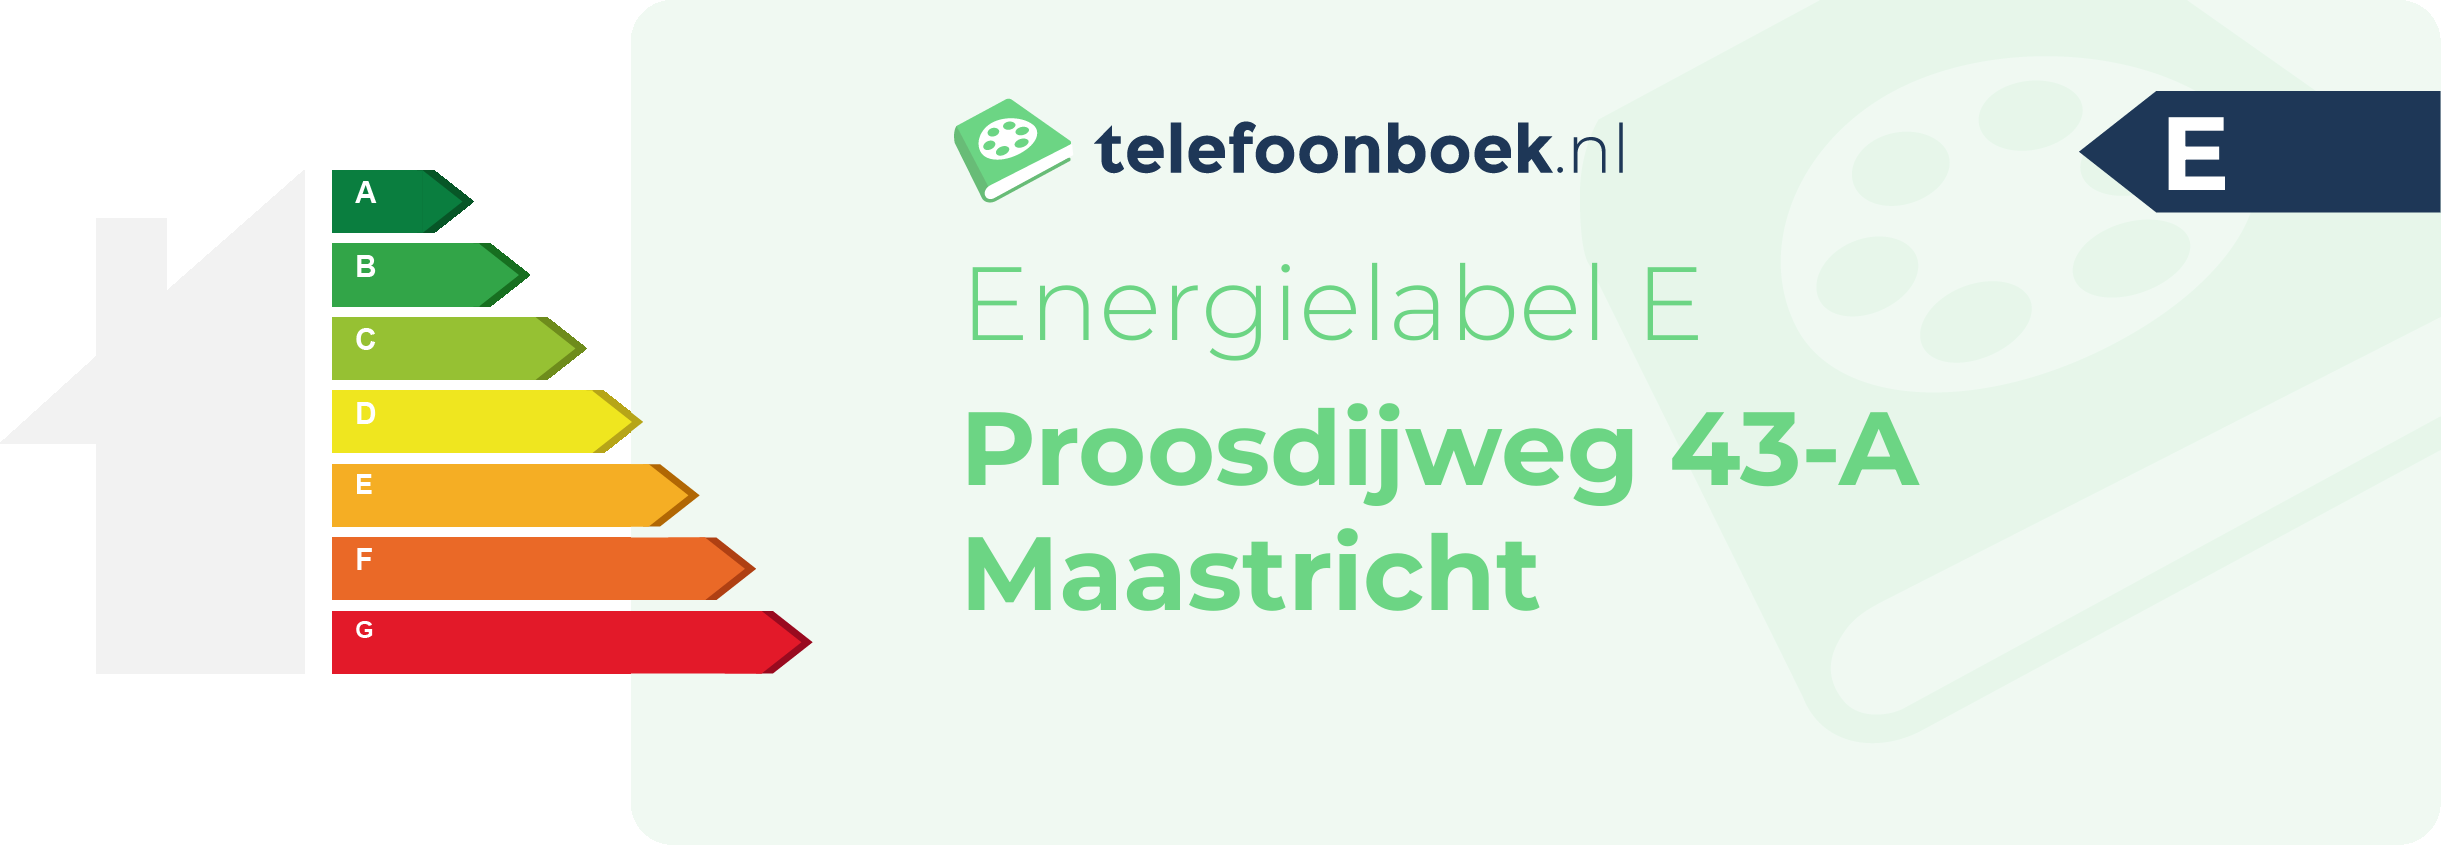 Energielabel Proosdijweg 43-A Maastricht